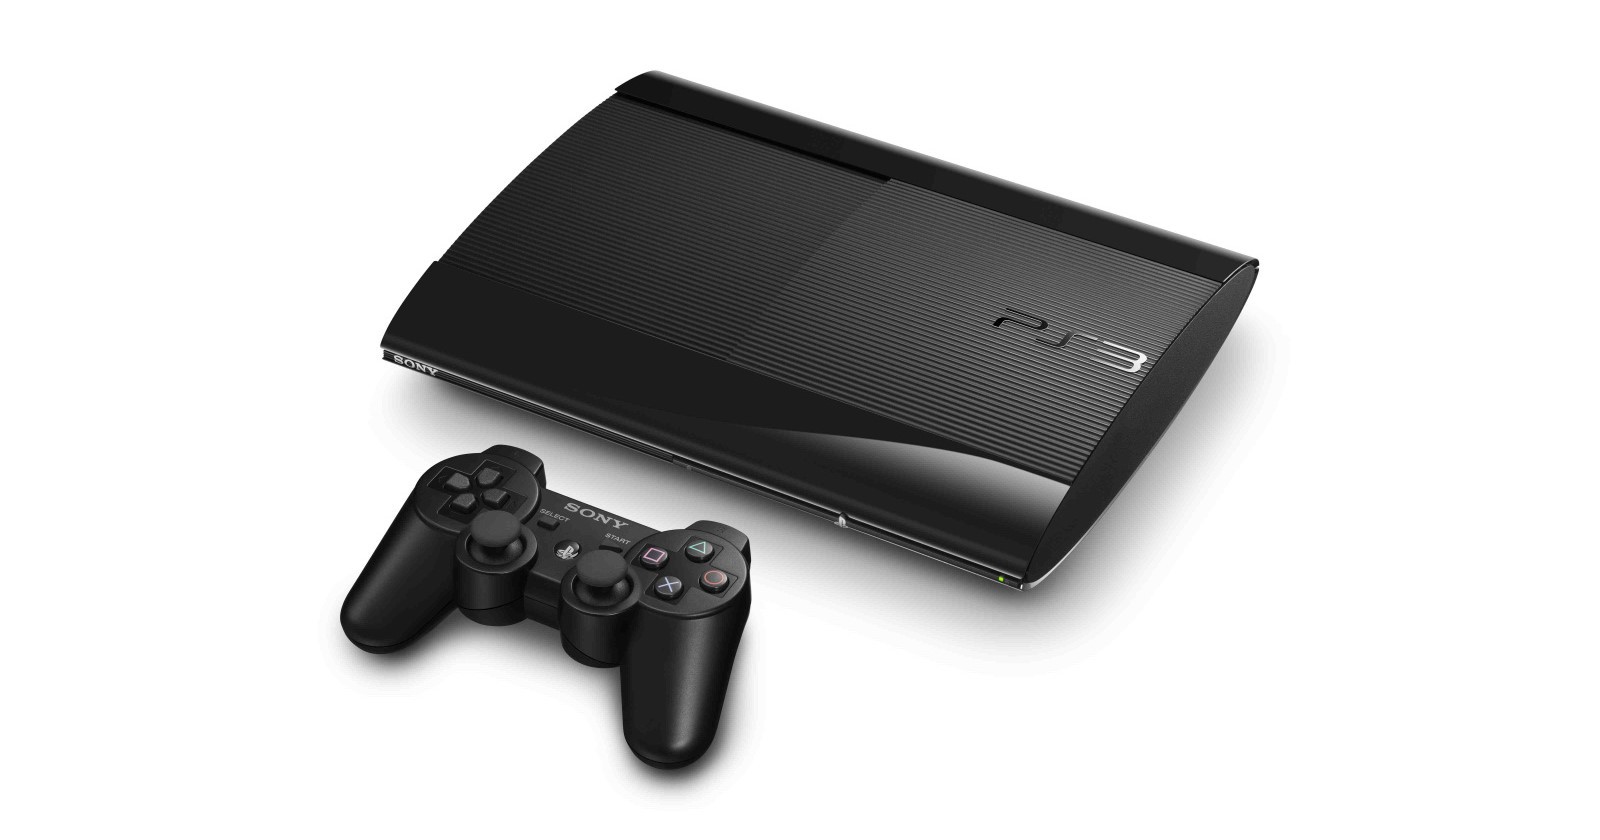 PS3、PS Vita 與 PSP 線上商城確定 7 月起陸續結束販售服務 已購買內容仍可繼續下載